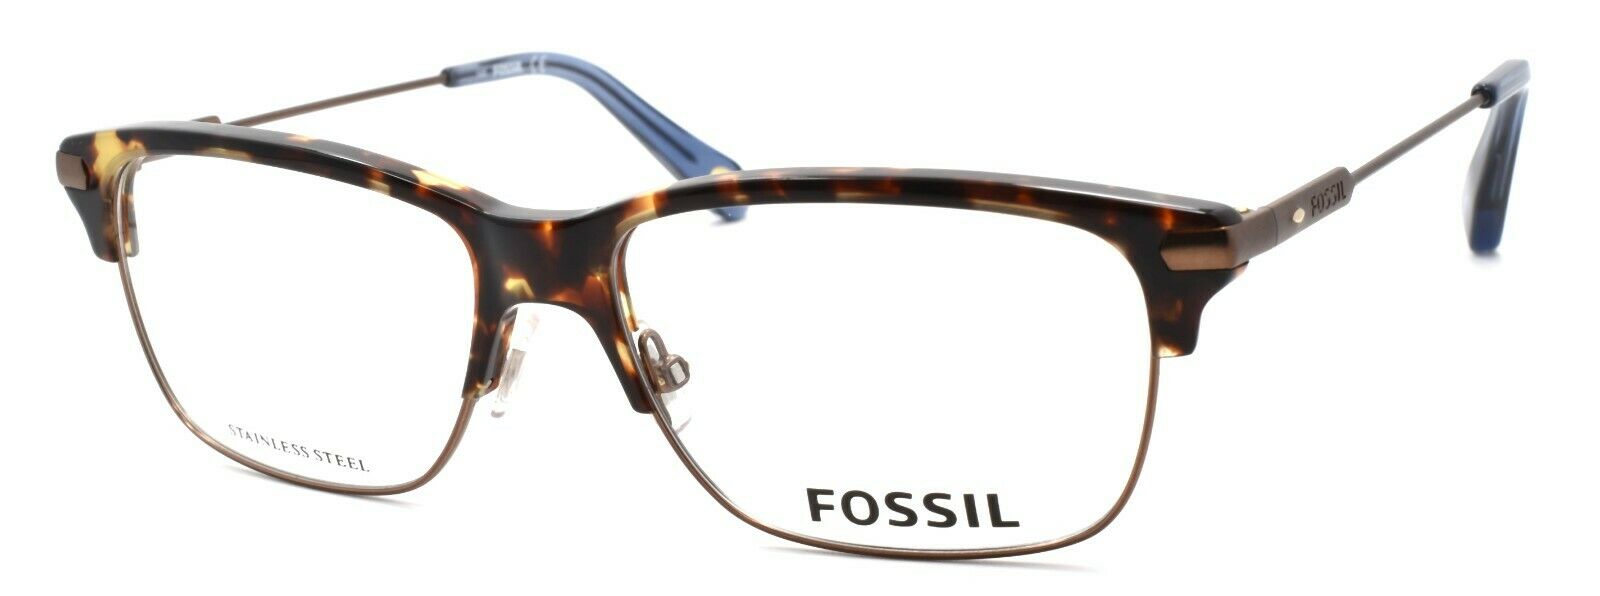 1-Fossil FOS 6056 OIS Men's Eyeglasses Frames 53-15-145 Matte Brown / Havana-762753386458-IKSpecs